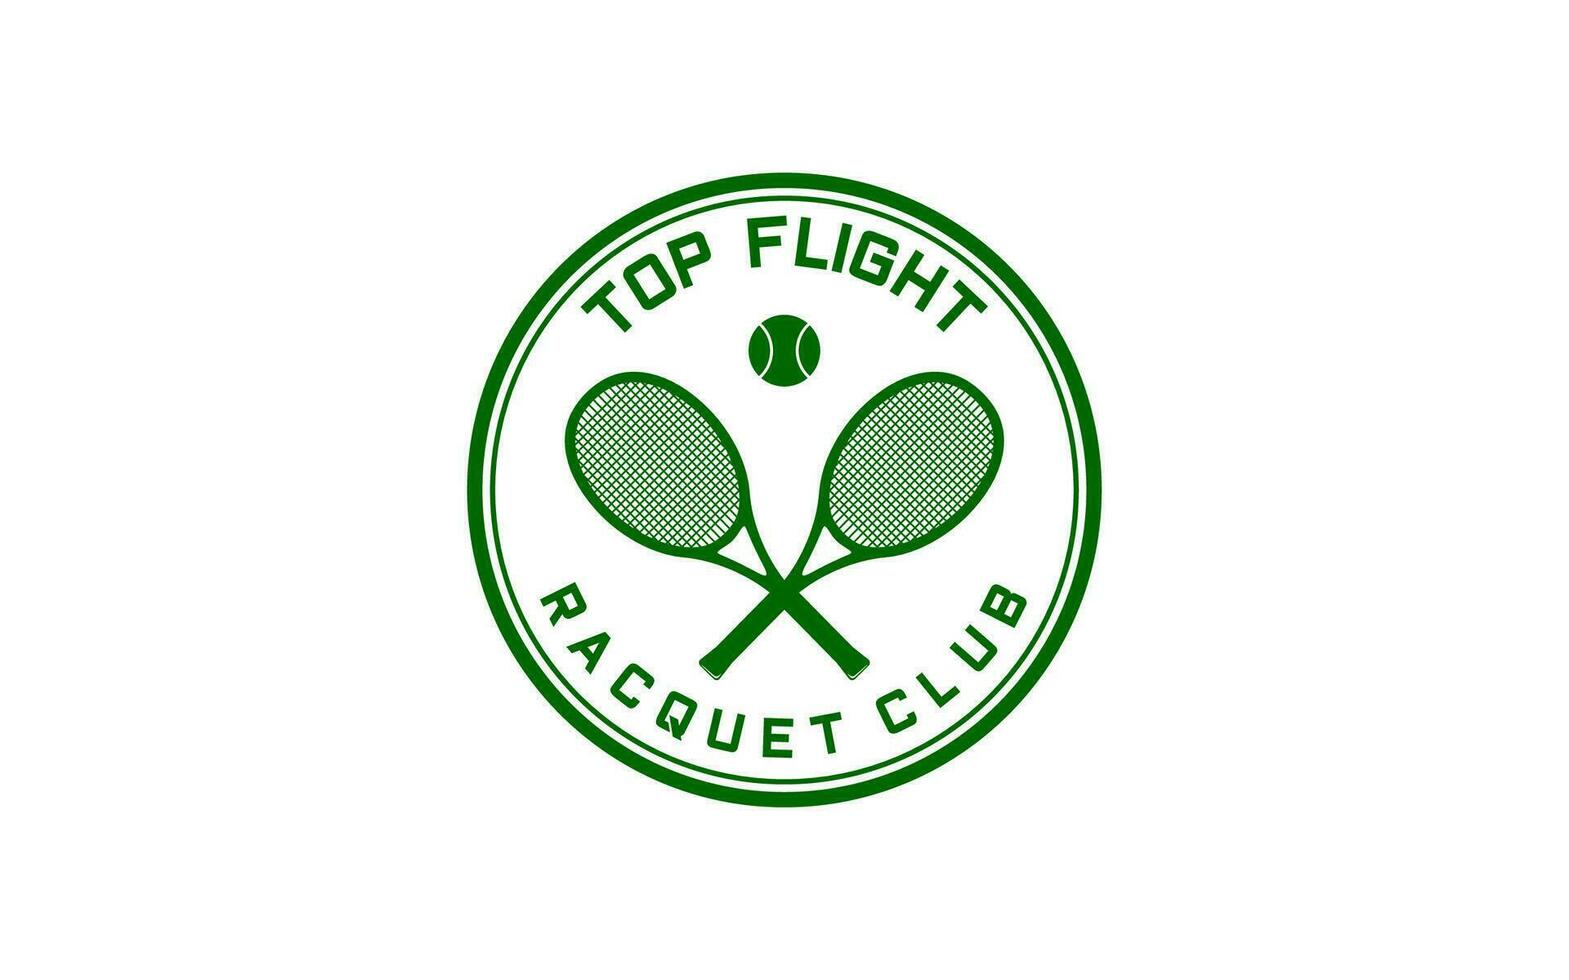 Tennis club badges vector logo design